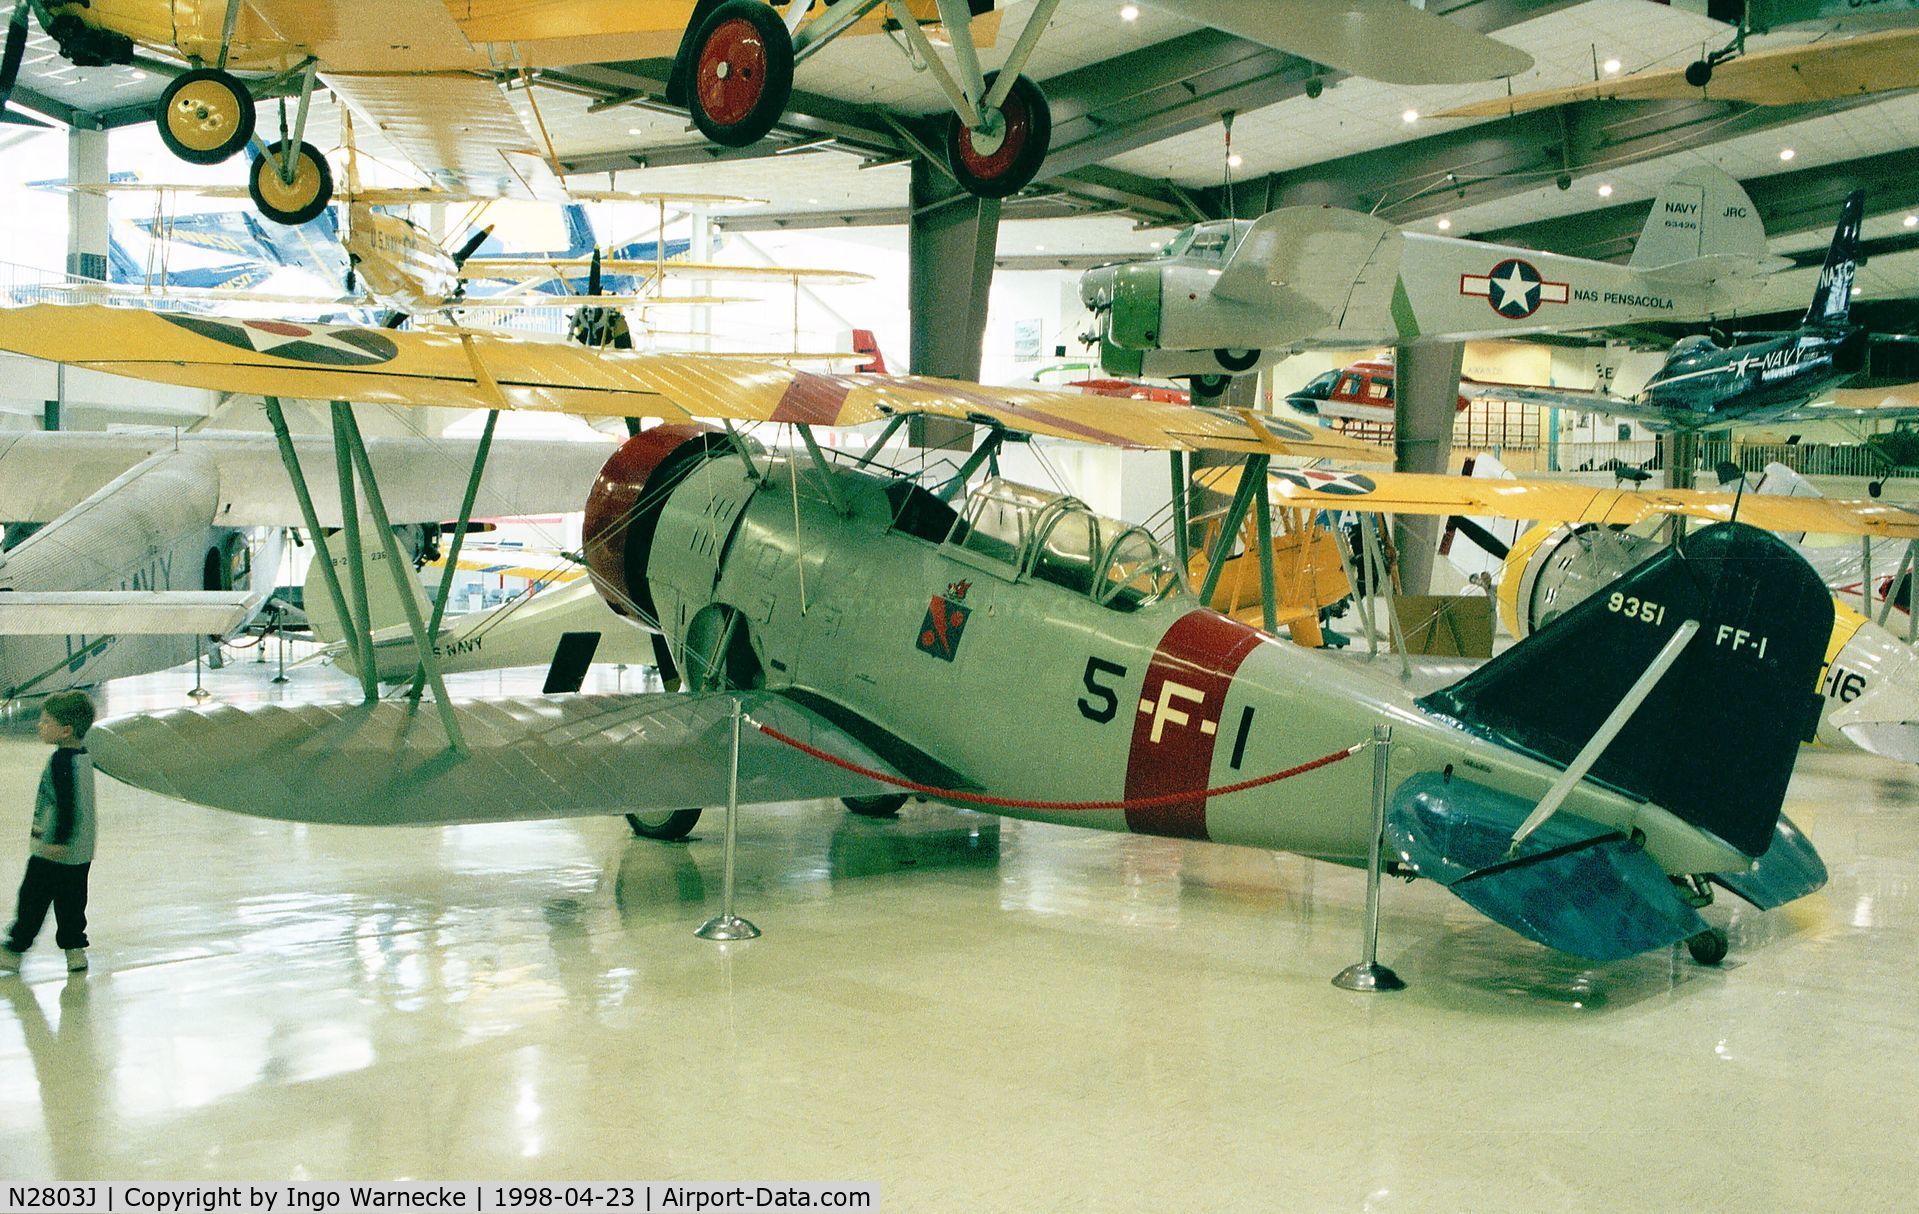 N2803J, Grumman G.23 C/N 101, Grumman FF-1 at the Museum of Naval Aviation, Pensacola FL